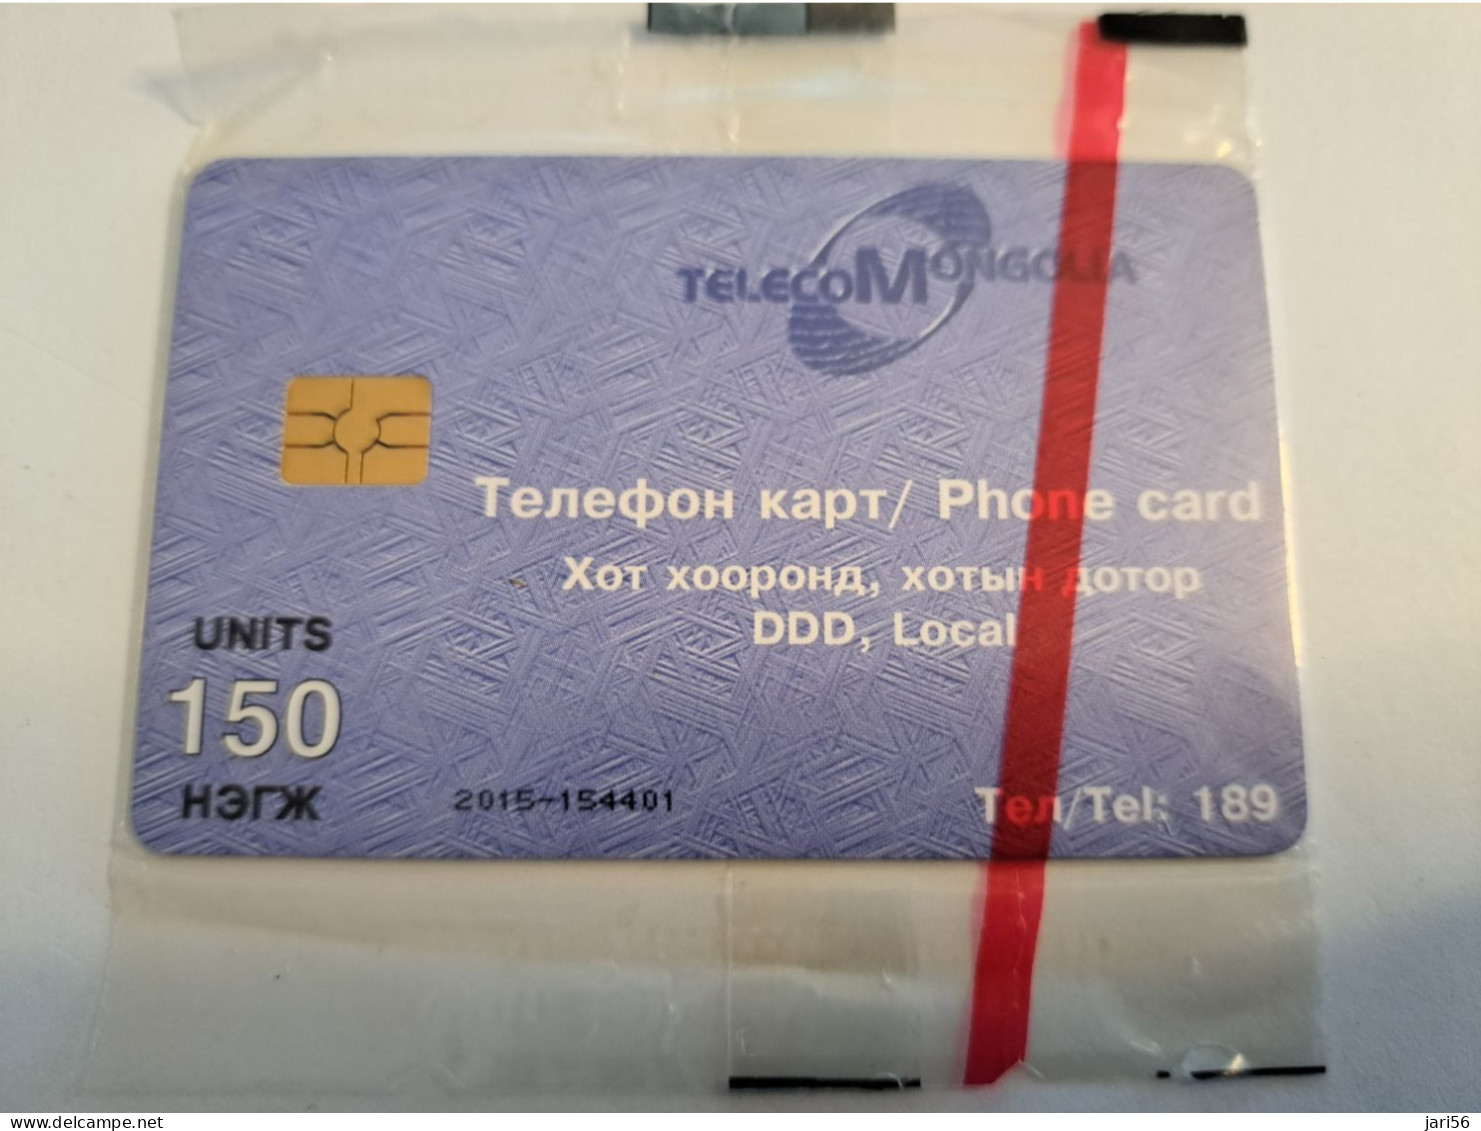 MONGOLIA  CHIPCARD / 150 UNITS / TELECO/MONGOLIA / MOUNTAIN/LAKE  MINT CARD / SEALED IN WRAPPER ** 16045 ** - Mongolia